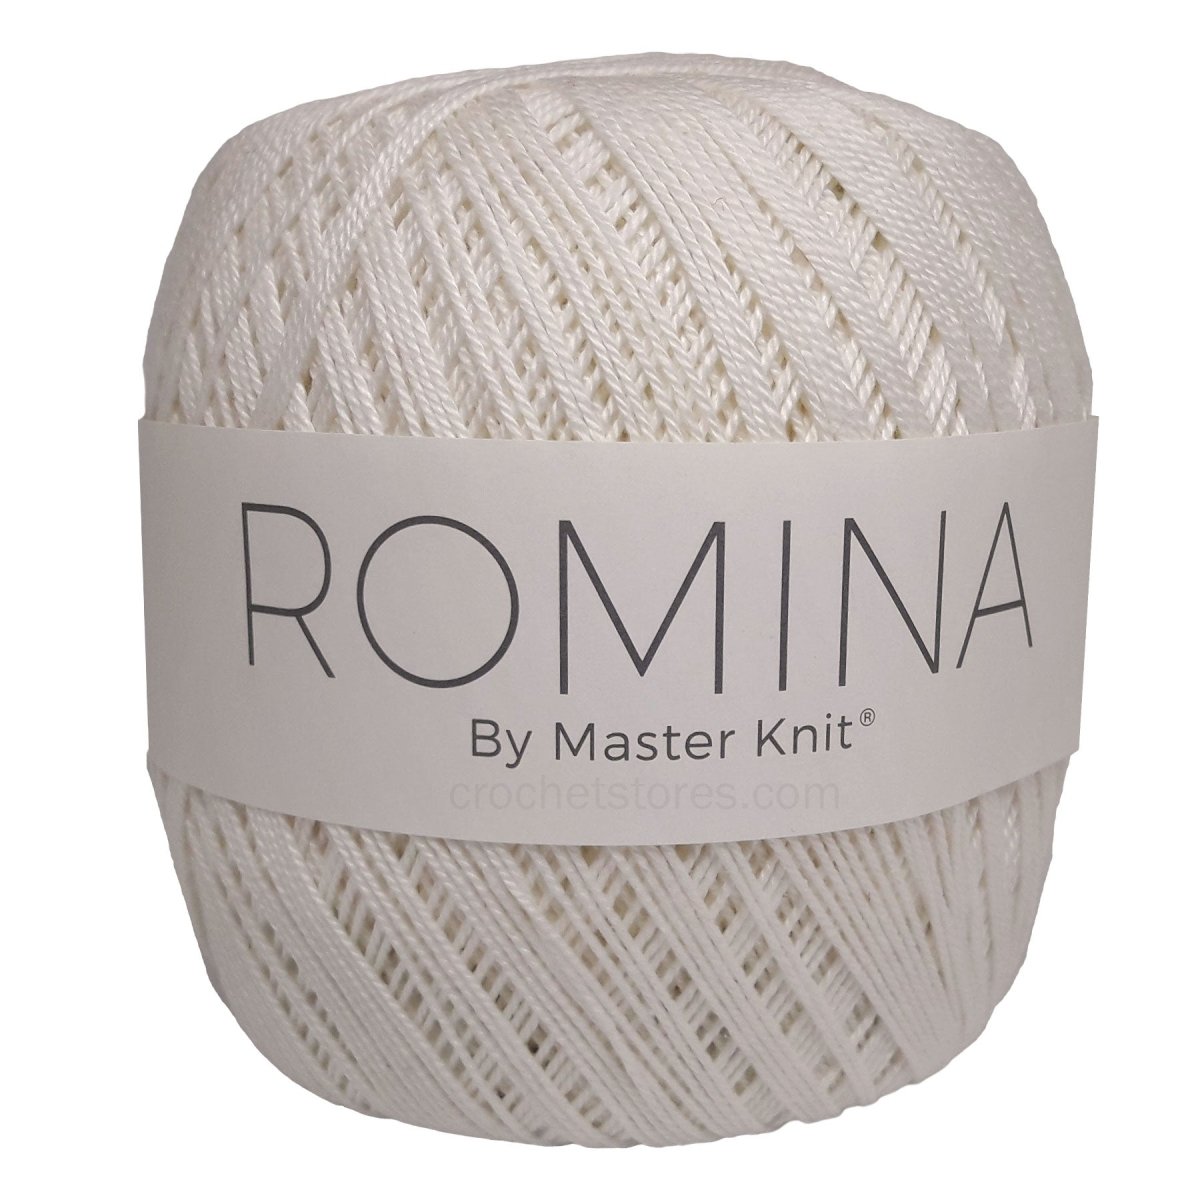 ROMINA - Crochetstores9335-101745051438449